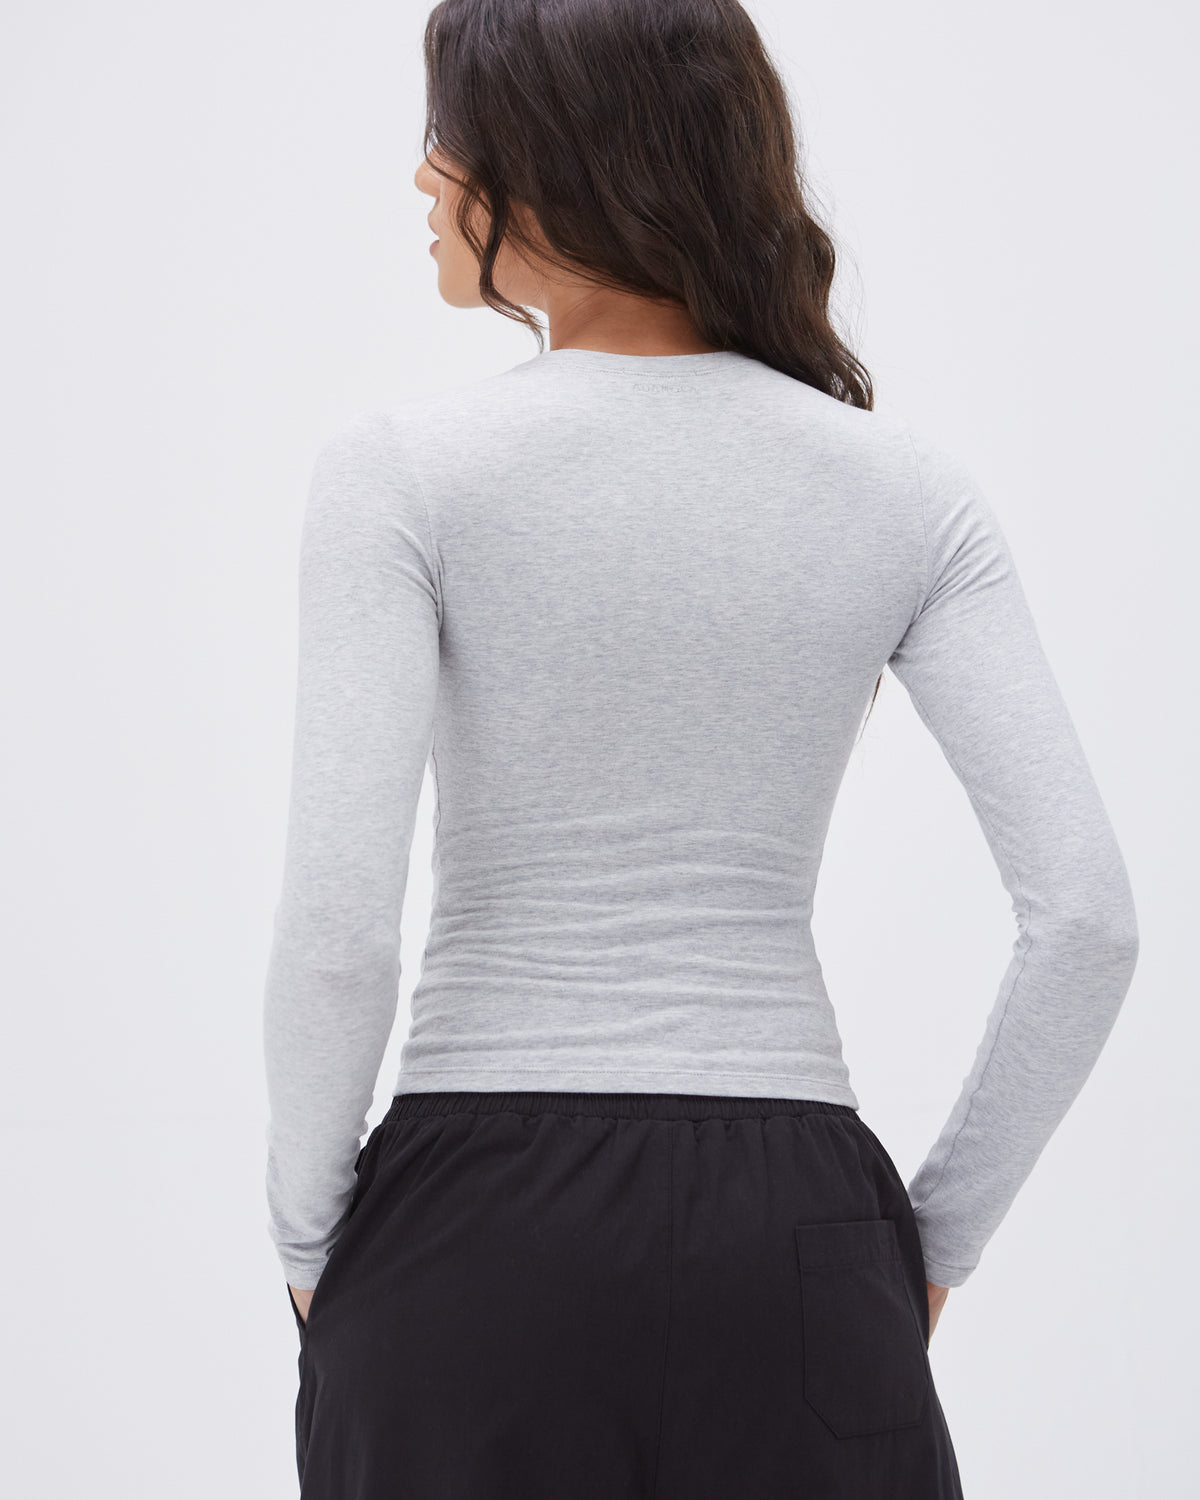 Women's Grey Fitted Long Sleeve Top | Adanola